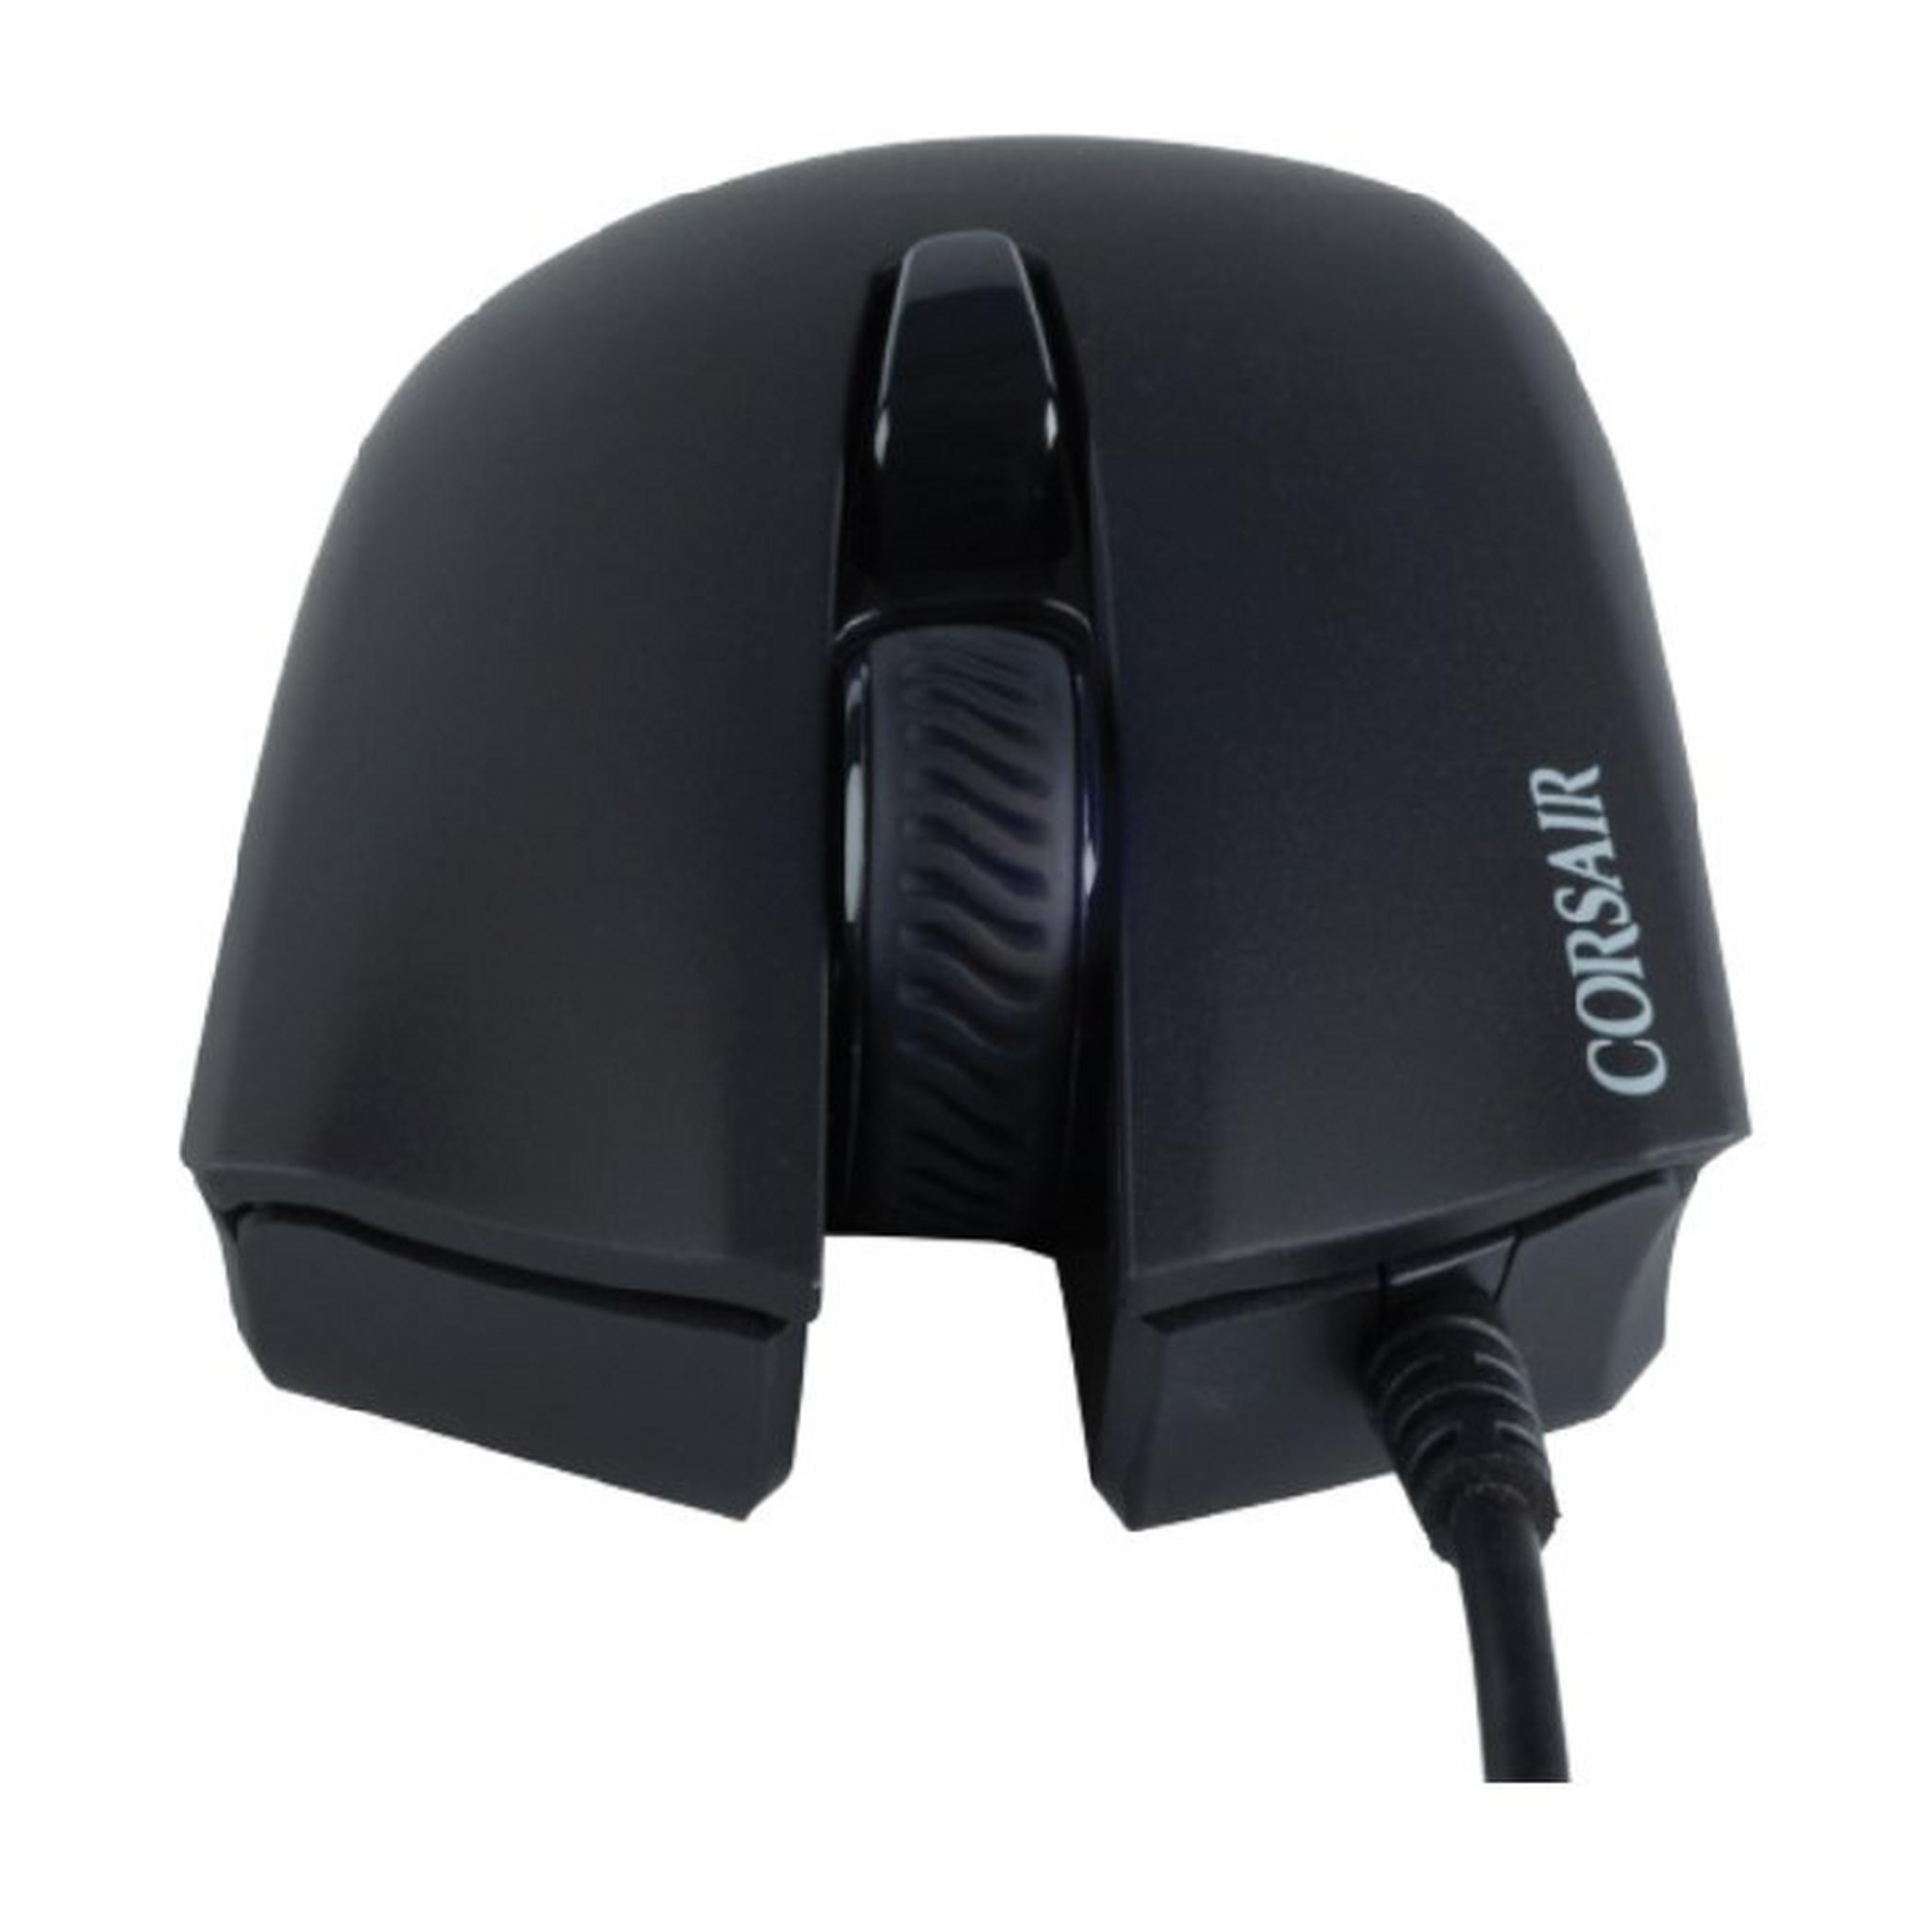 Corsair Harpoon RGB Pro FPS/Moba Gaming Mouse - Black